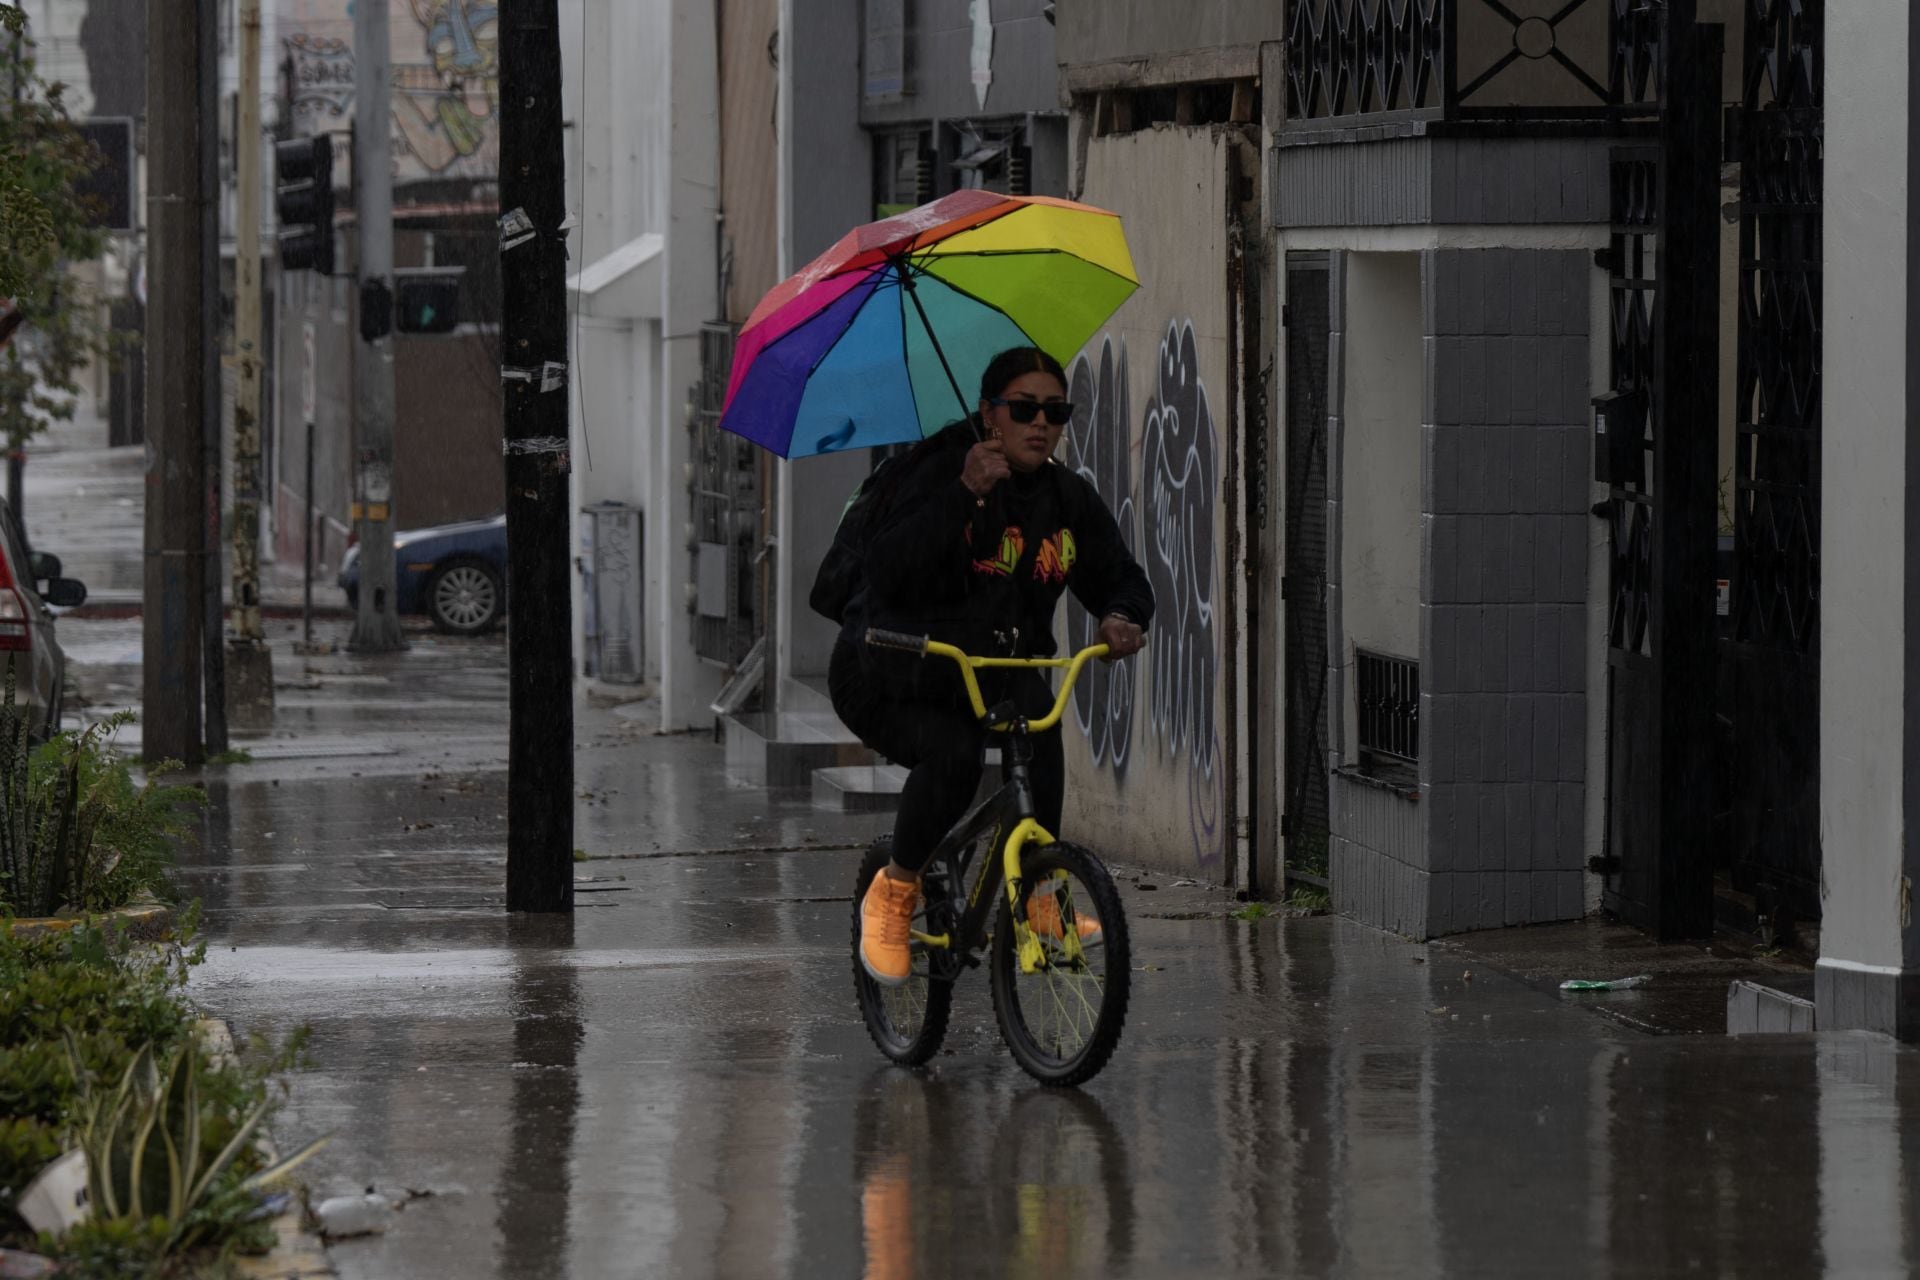 Adiós, onda de calor, hola, lluvias torrenciales: Así estará el clima en México esta semana